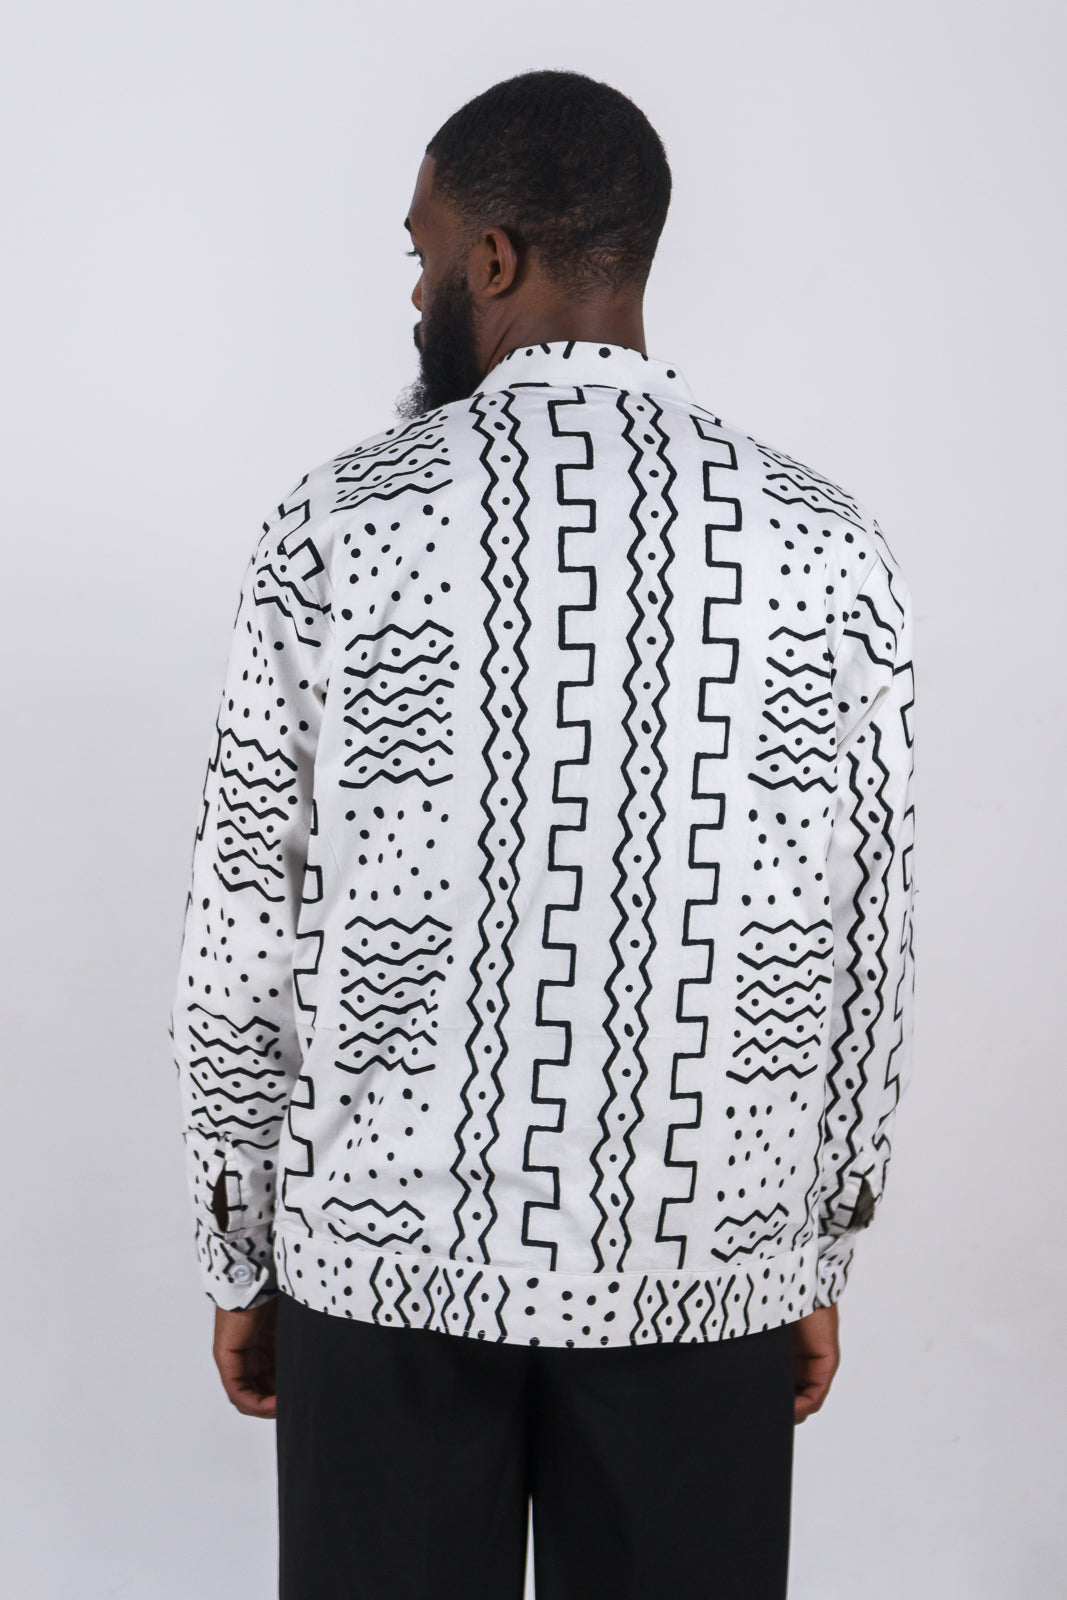 Obidike Black on white print jacket